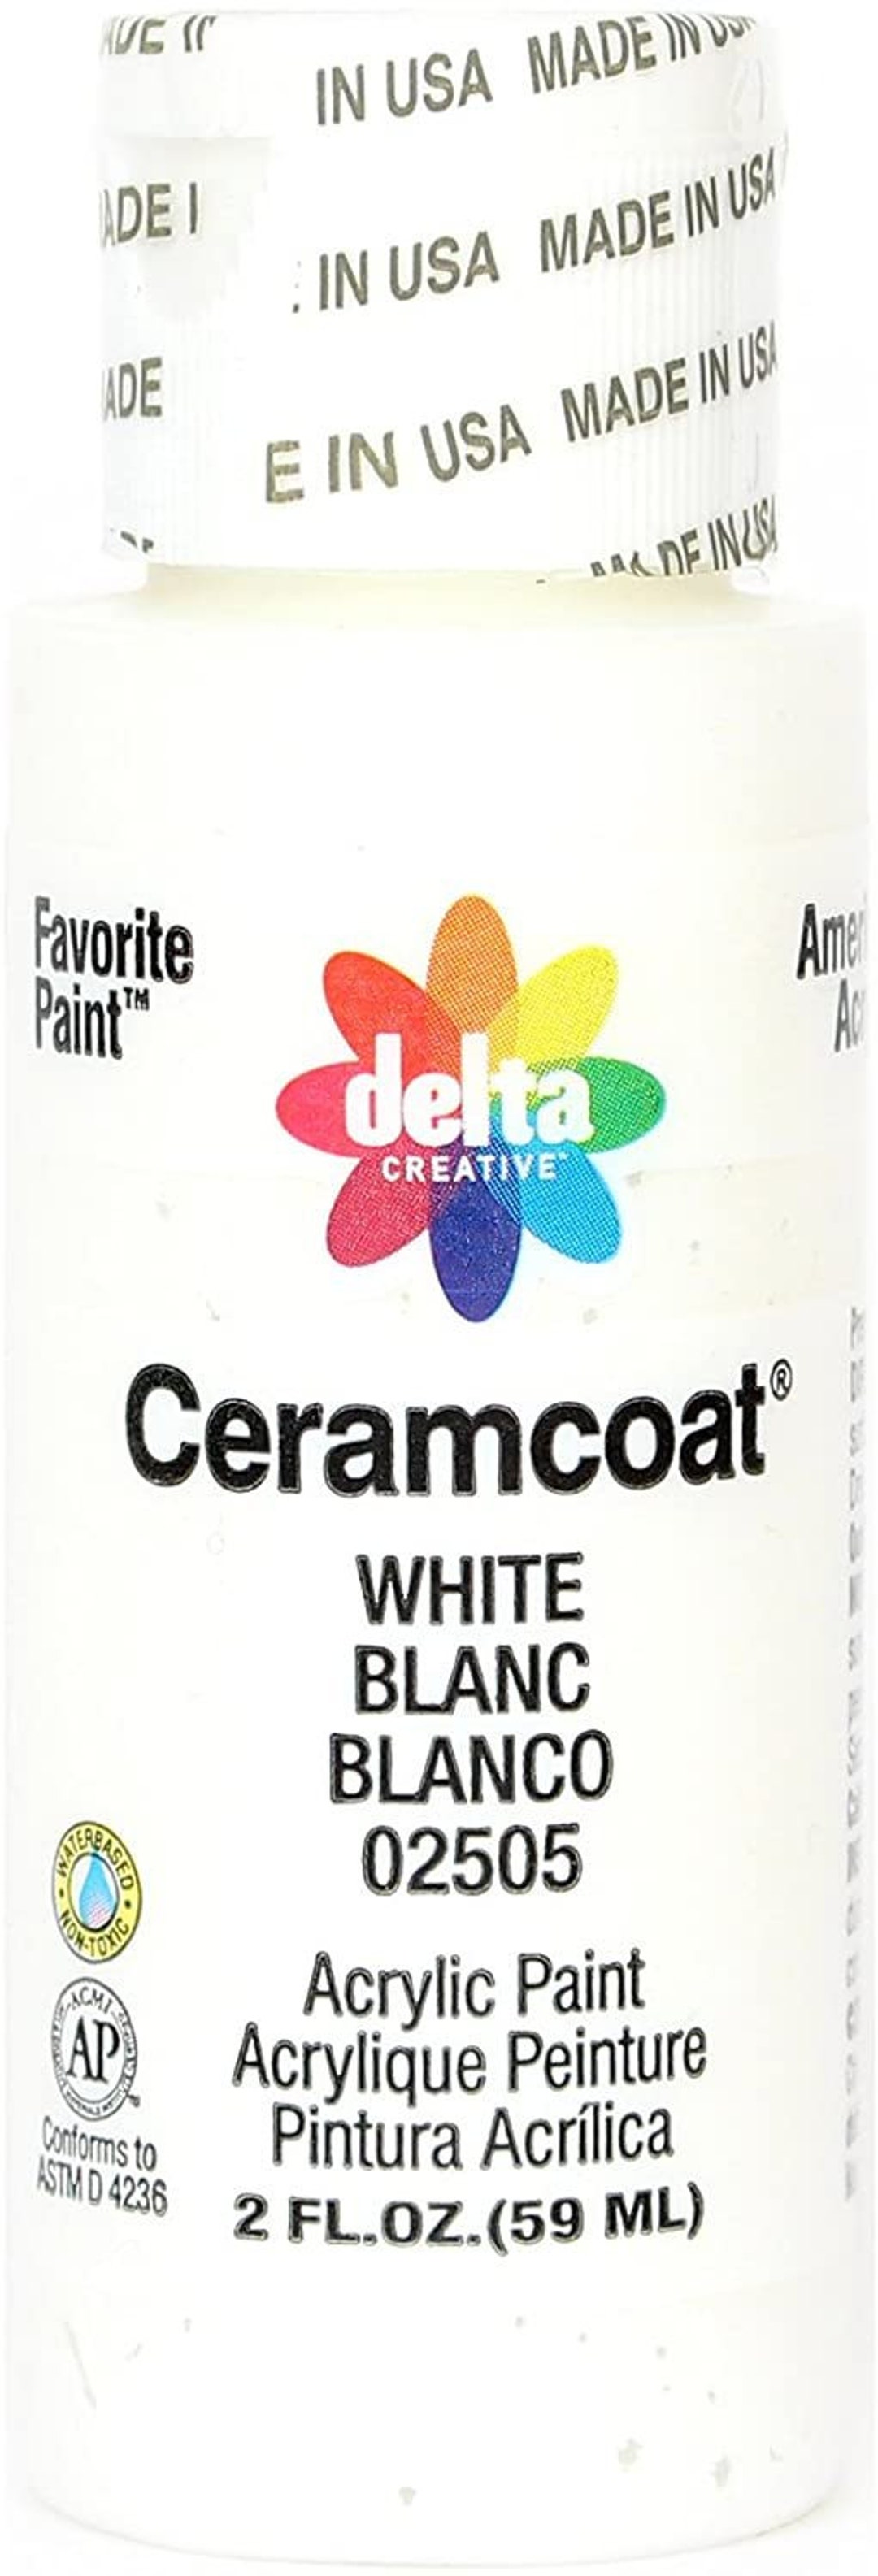 2 Fl Oz Acrylic Craft Paint - Delta Ceramcoat : Target